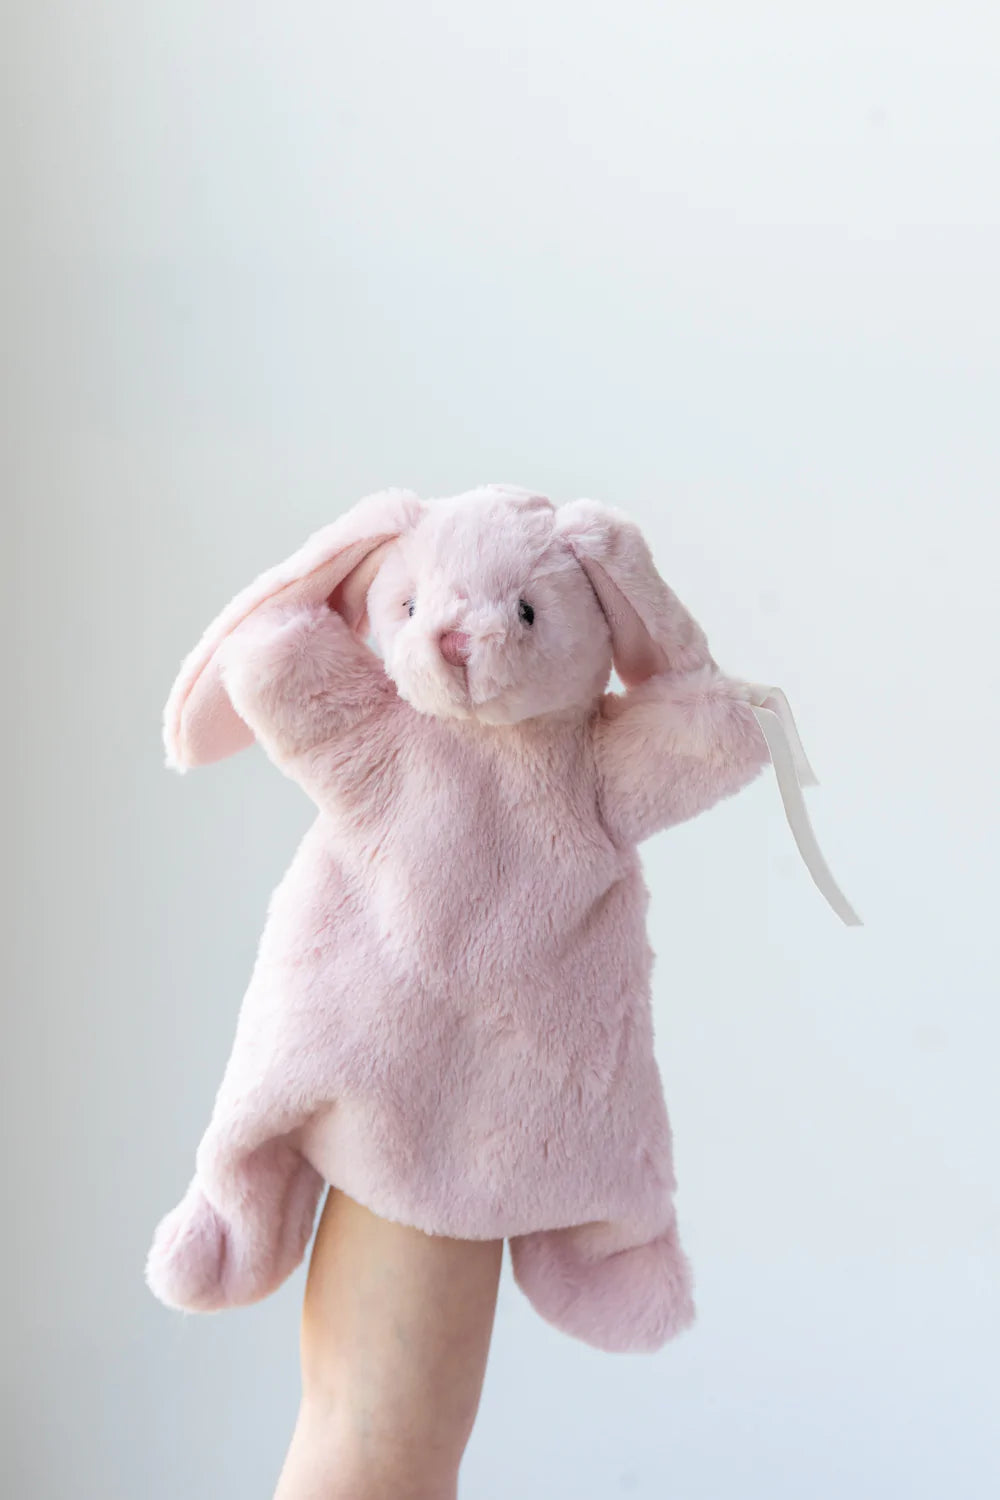 Nana Huchy Hoochy Coochie - Pixie the Bunny